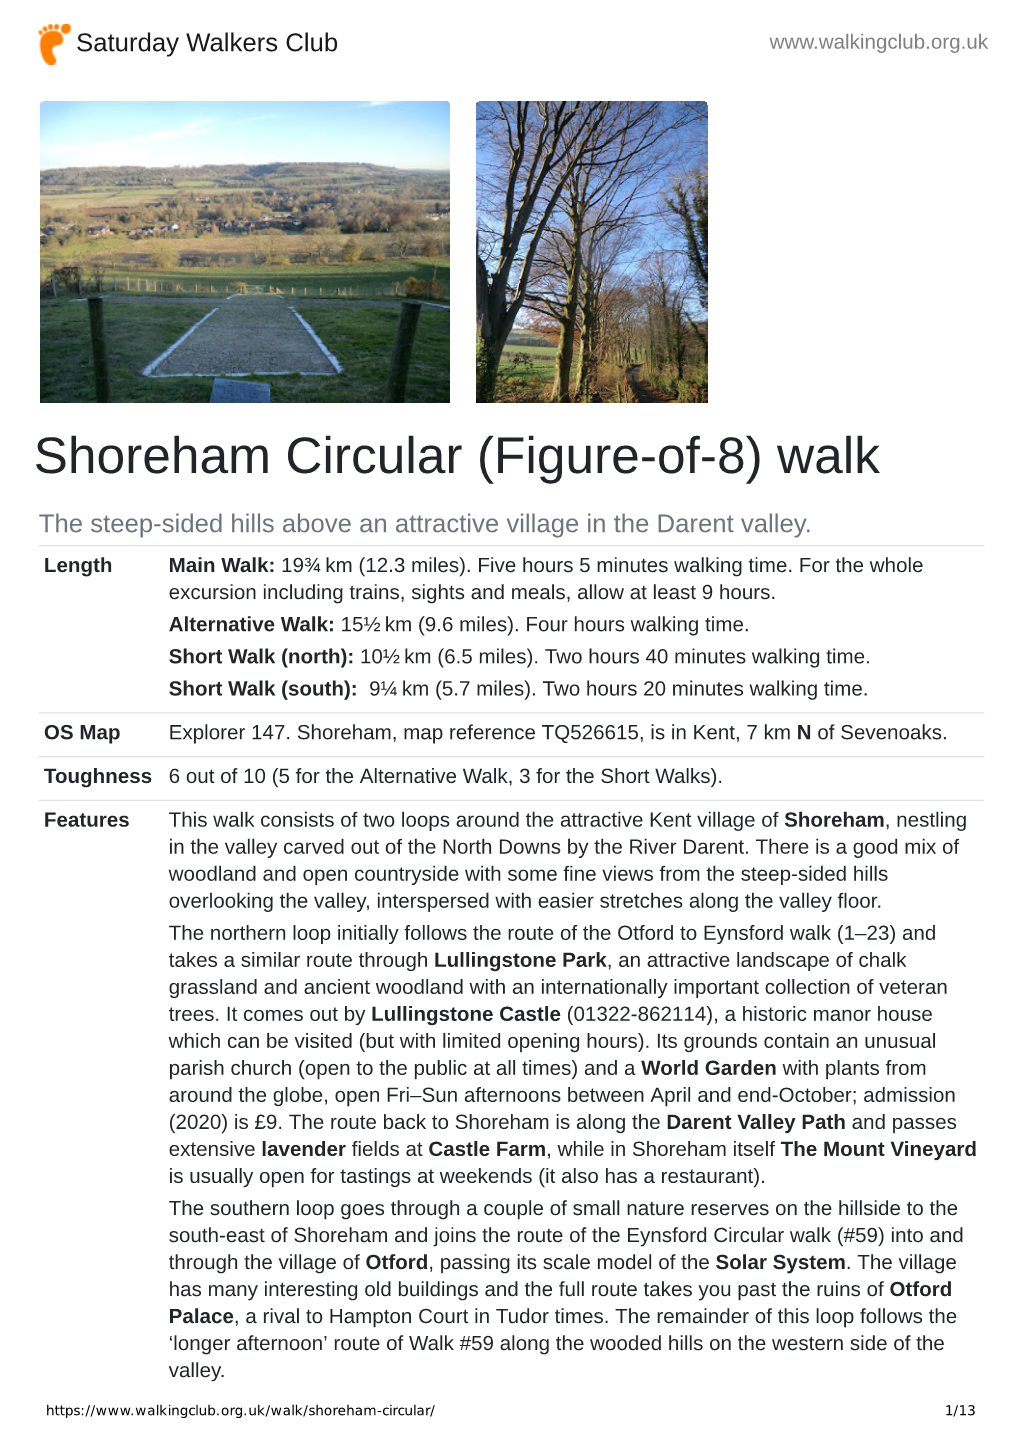 Shoreham Circular (Figure-Of-8) Walk